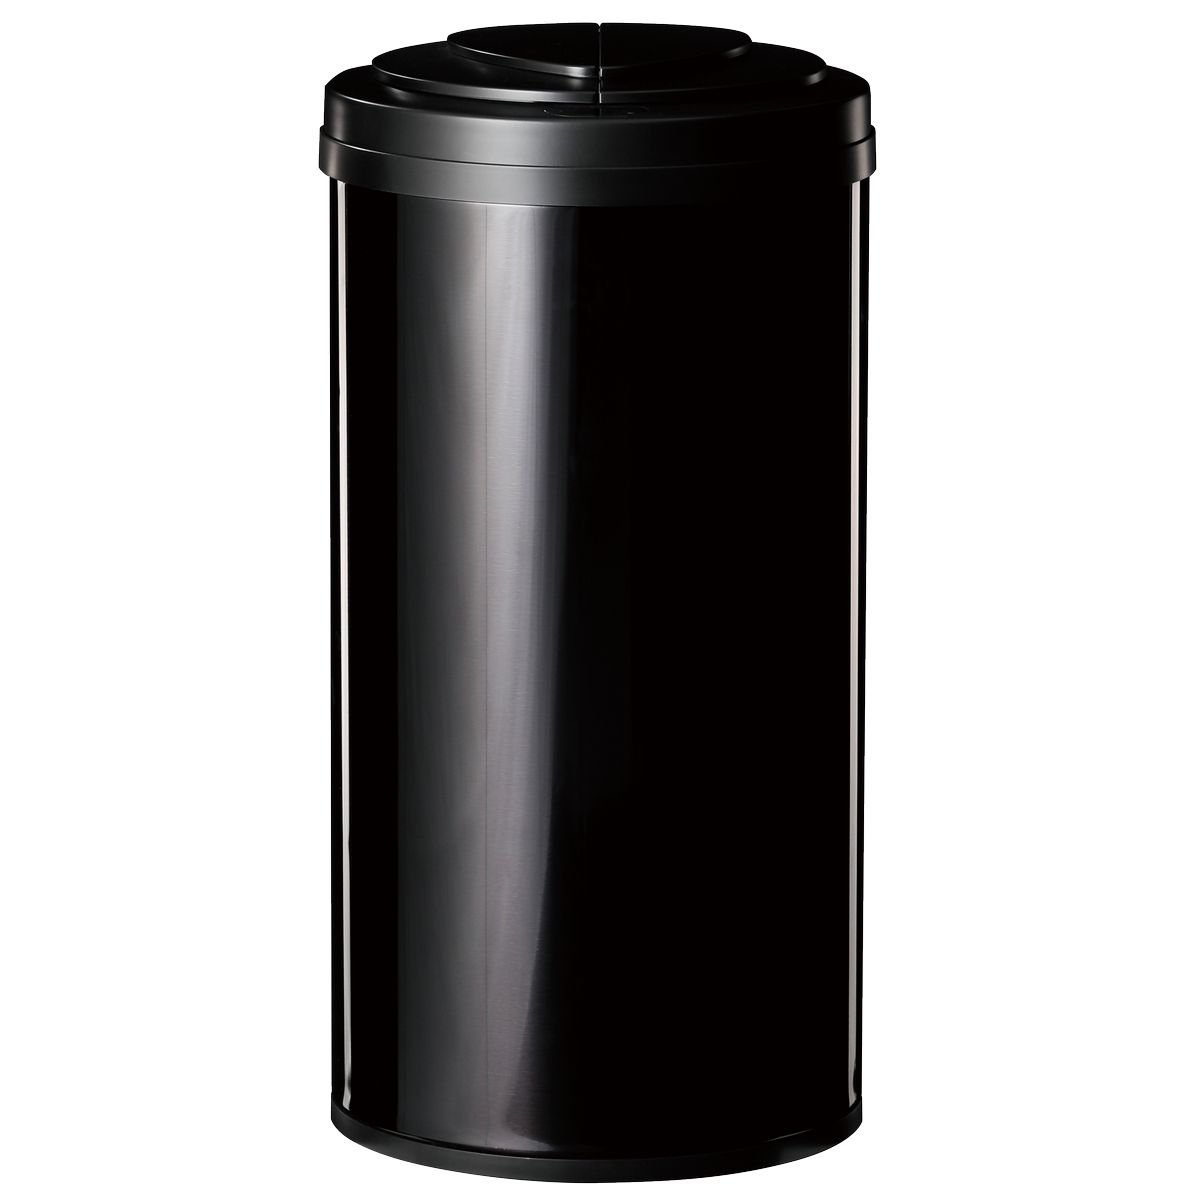 ZitA(ジータ) 自動開閉ゴミ箱 45L ブラック